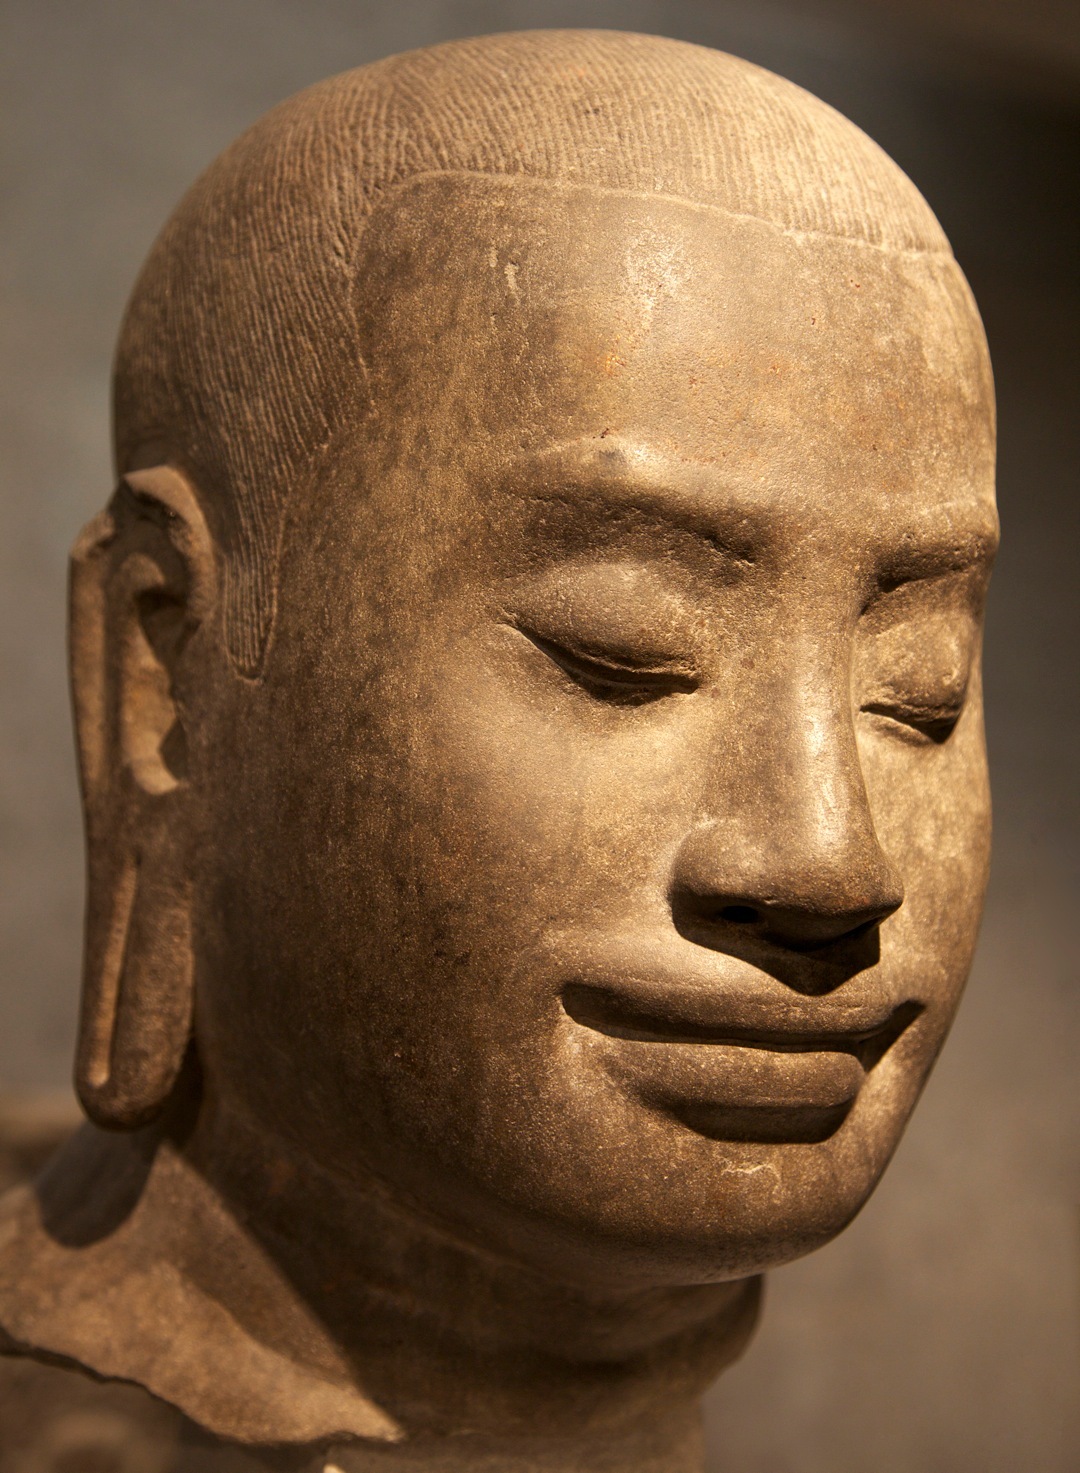 Wikipedia Commons photo of Jayavarman Bust, photo by Susan Black